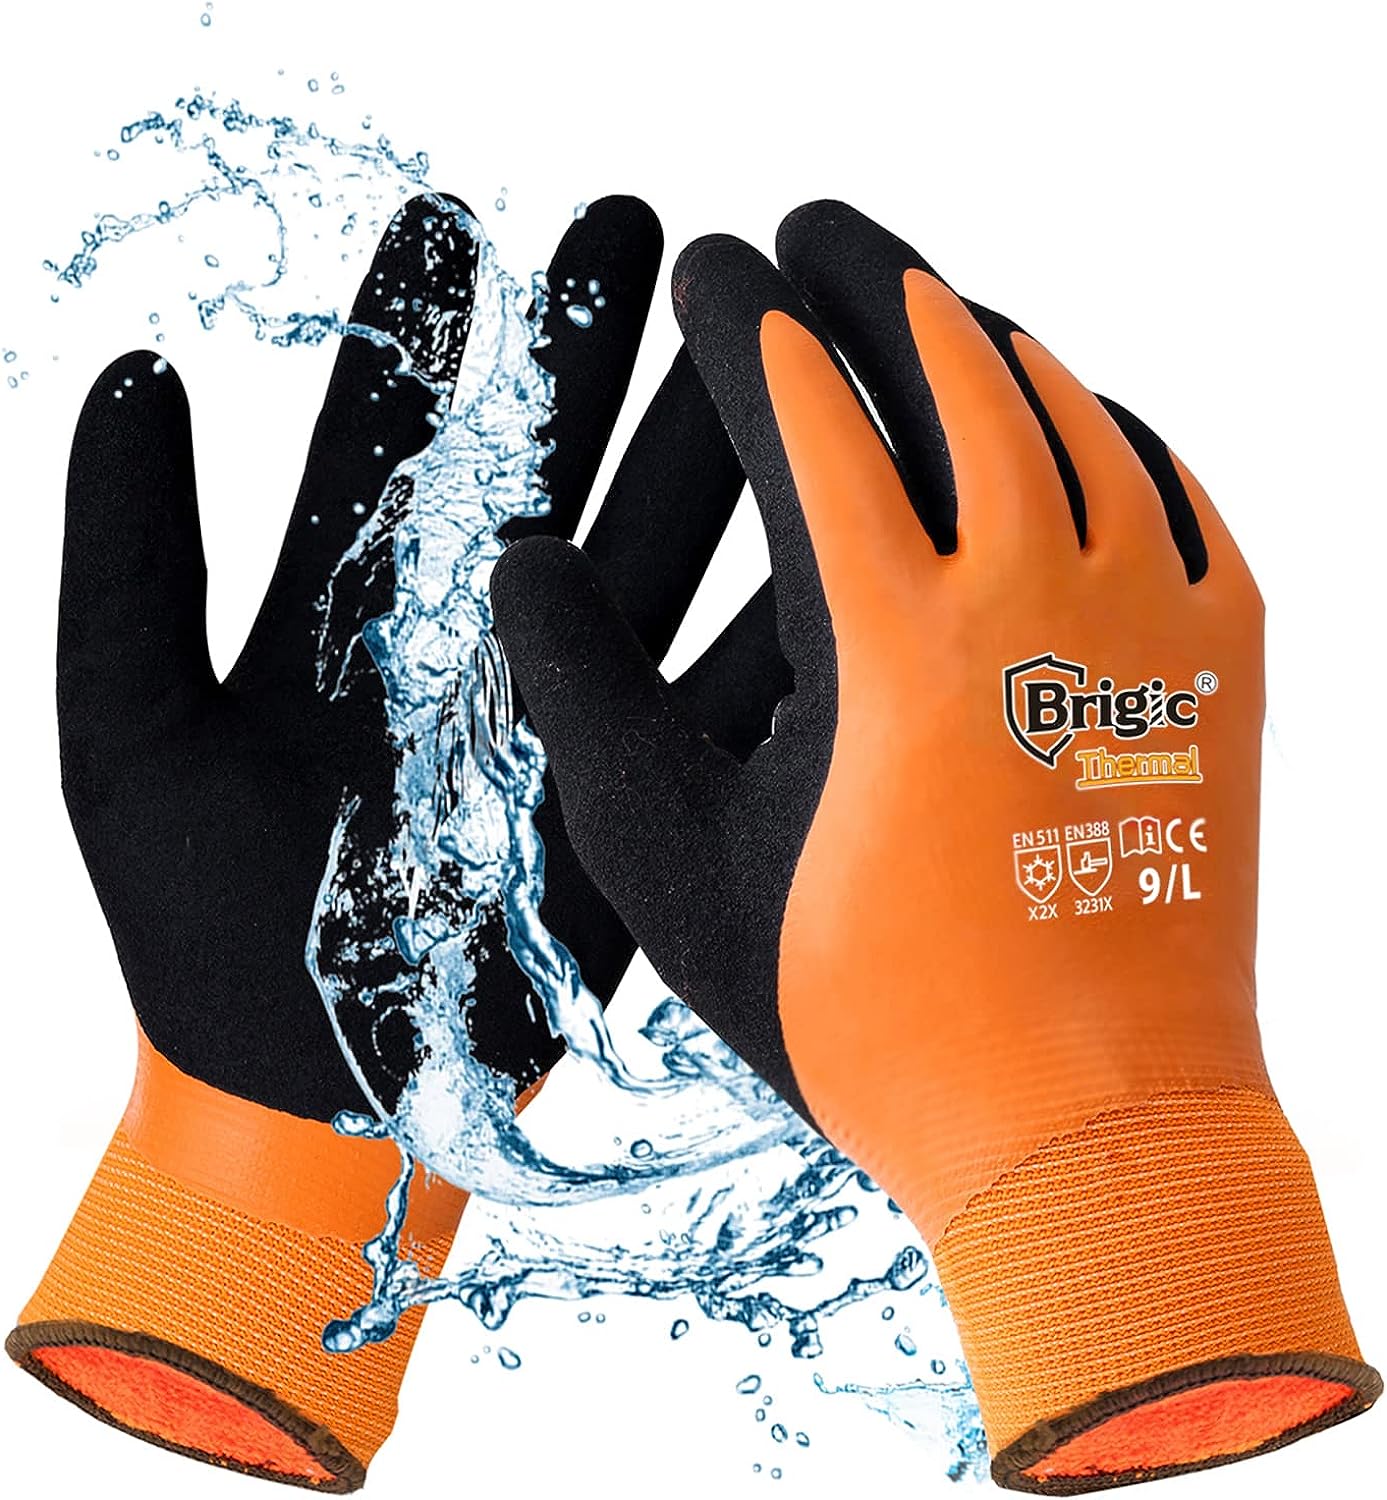 Brigic Winter Work Gloves for Men, Waterproof Work [...]